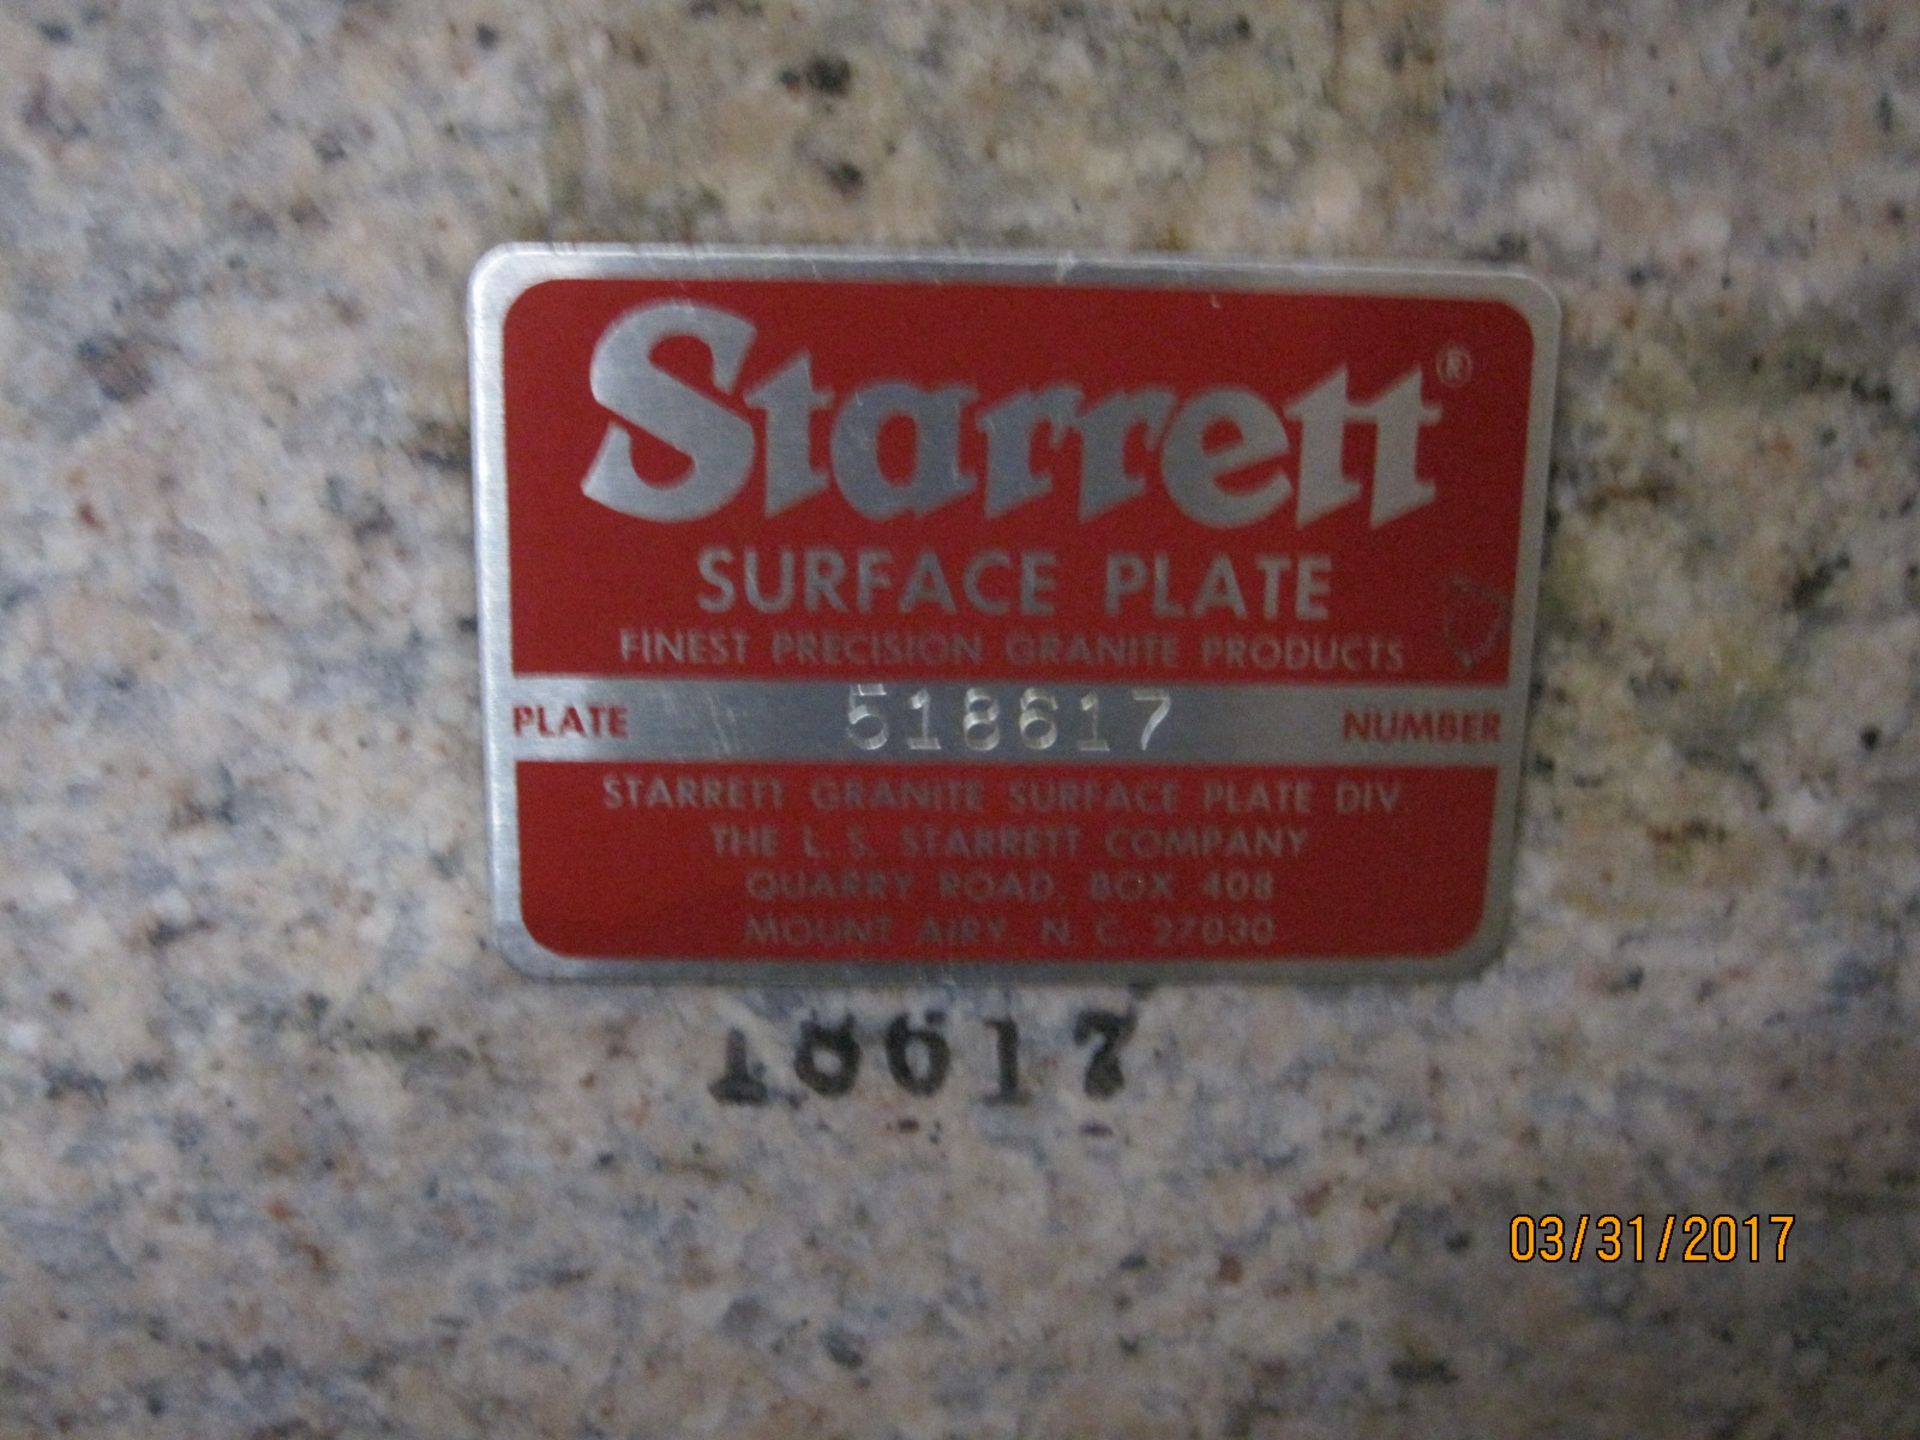 Starrett 36x24 Granite Surface Plate S/N 518617 - Image 3 of 3